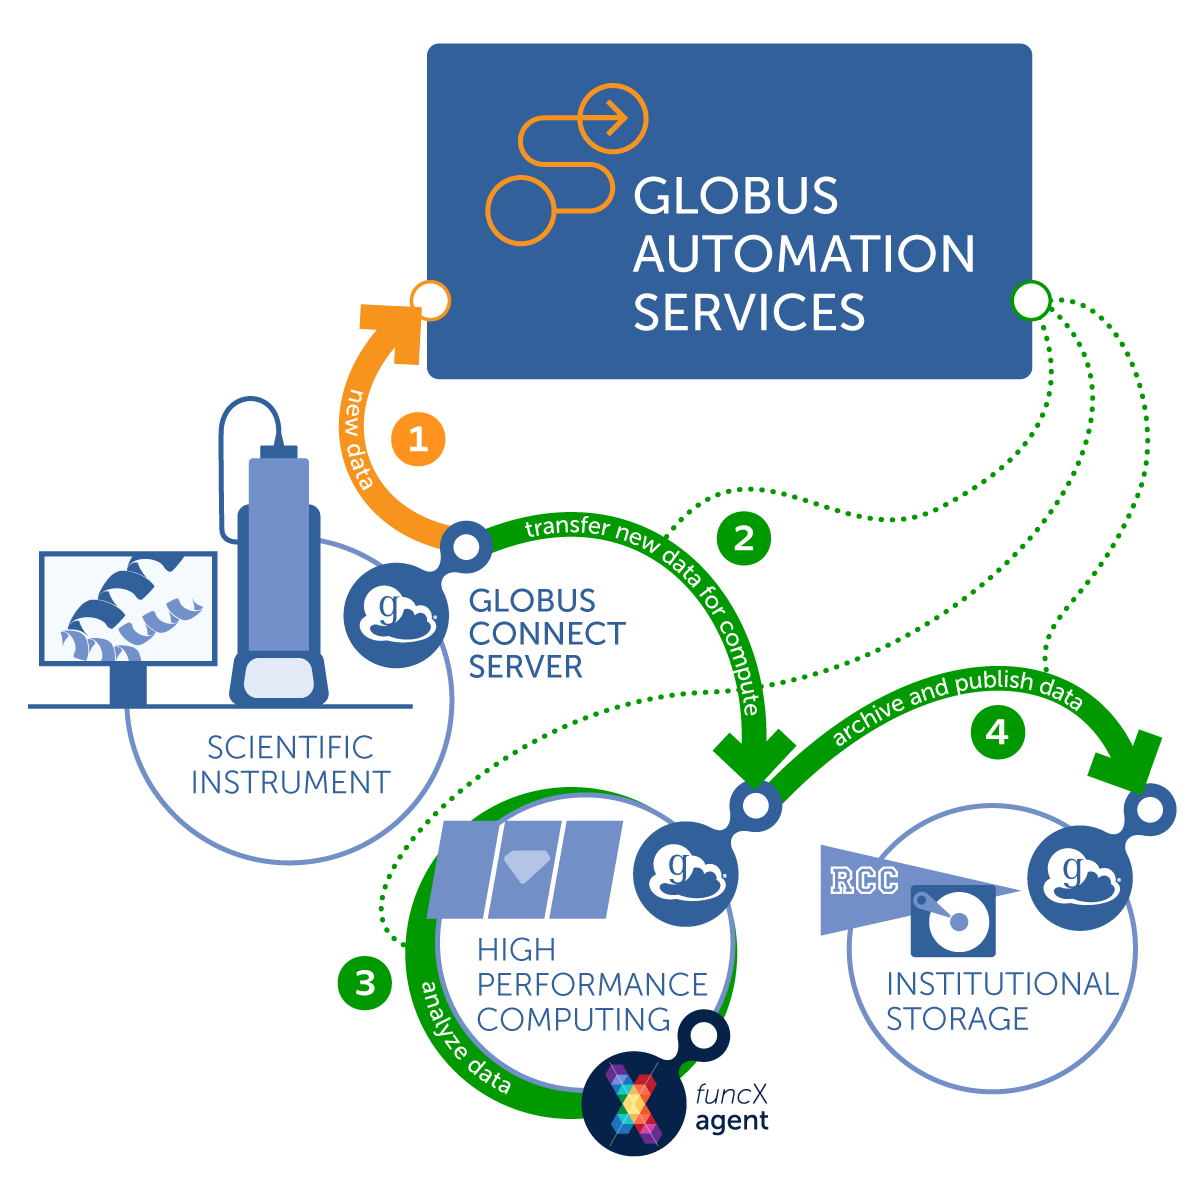 Globus Automation Services